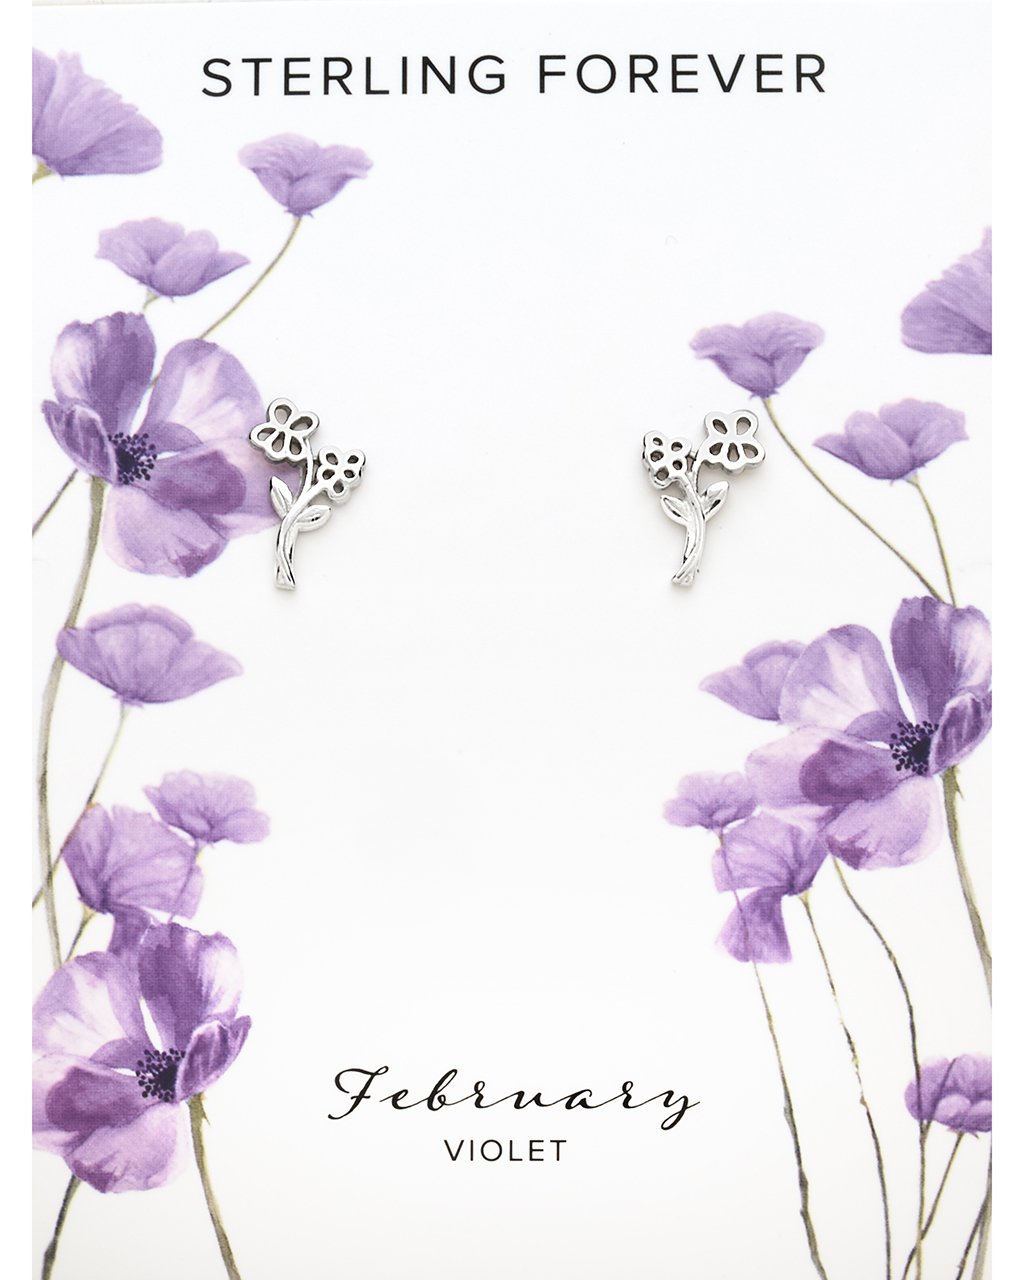 Sterling Silver Birth Flower Studs Earring Sterling Forever Silver February / Violet 